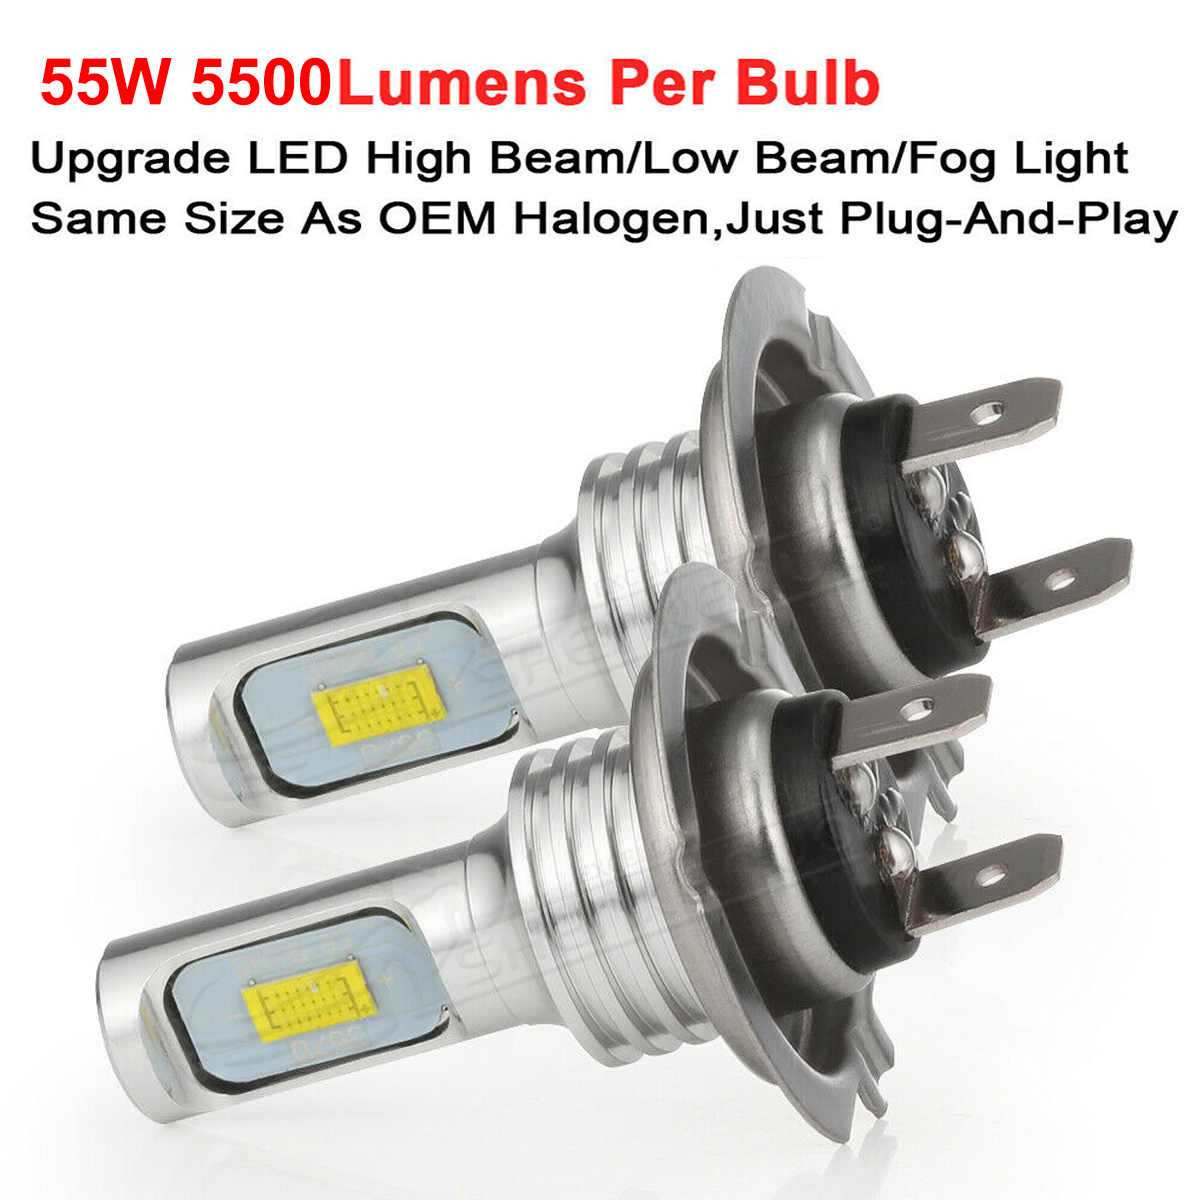 55W 5500LM H7 LED Headlight Bulb High/Low Beam Light 6000K White Replace  halogen